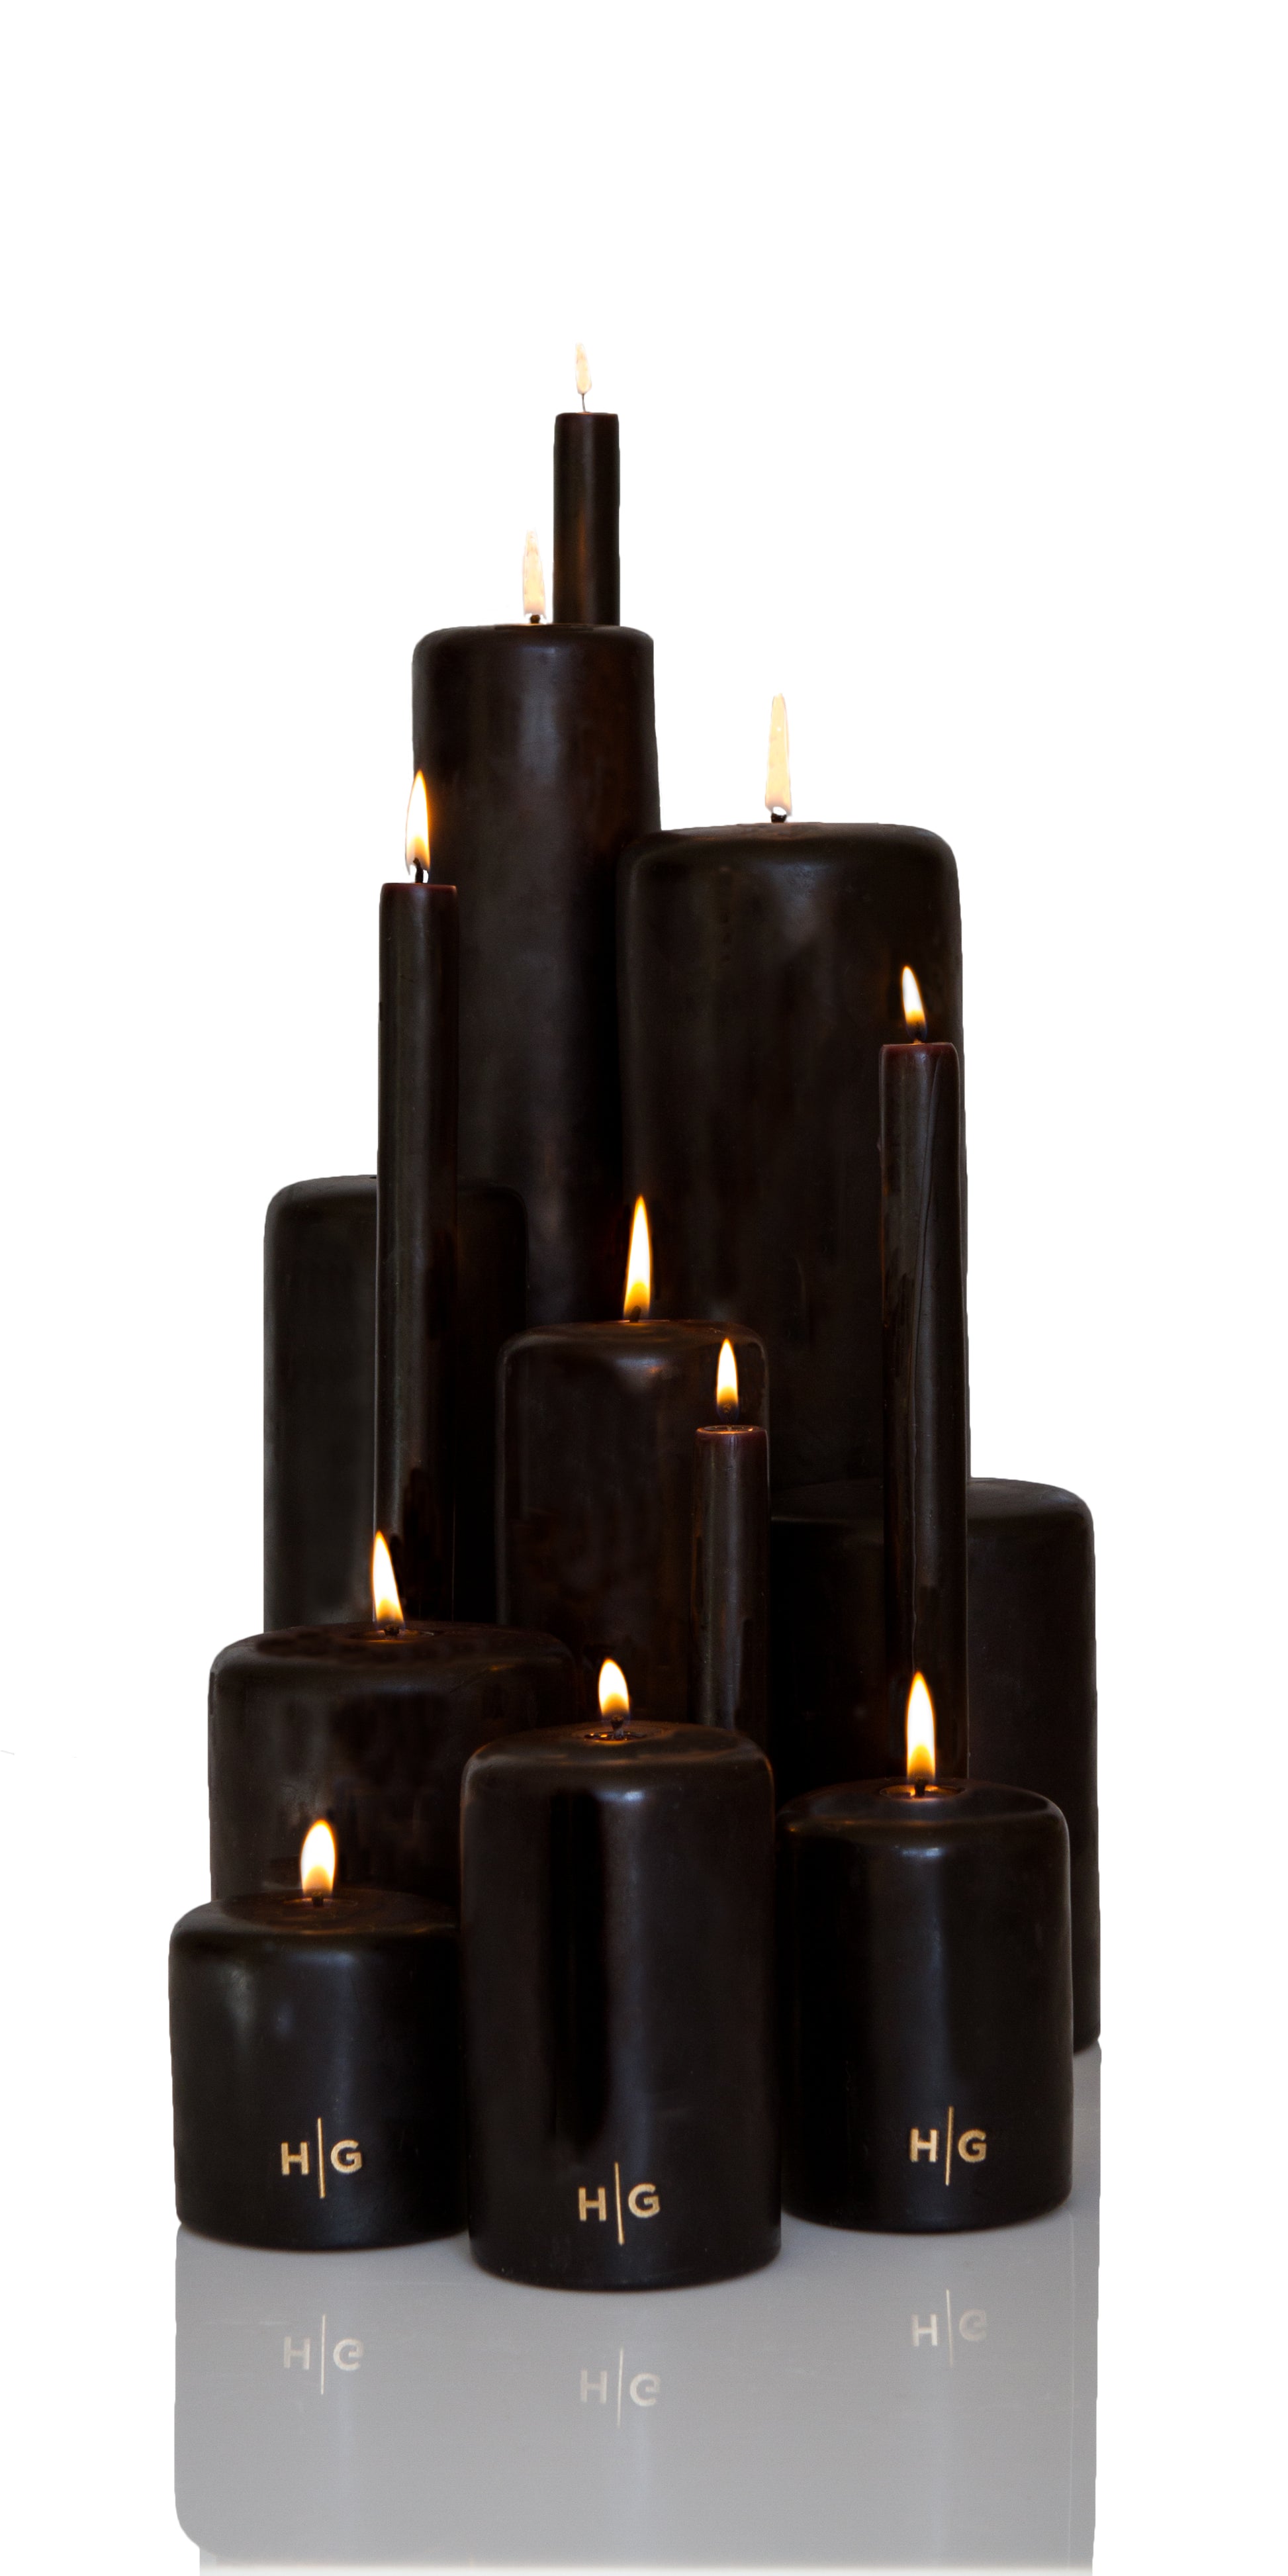 black unscented HG candle